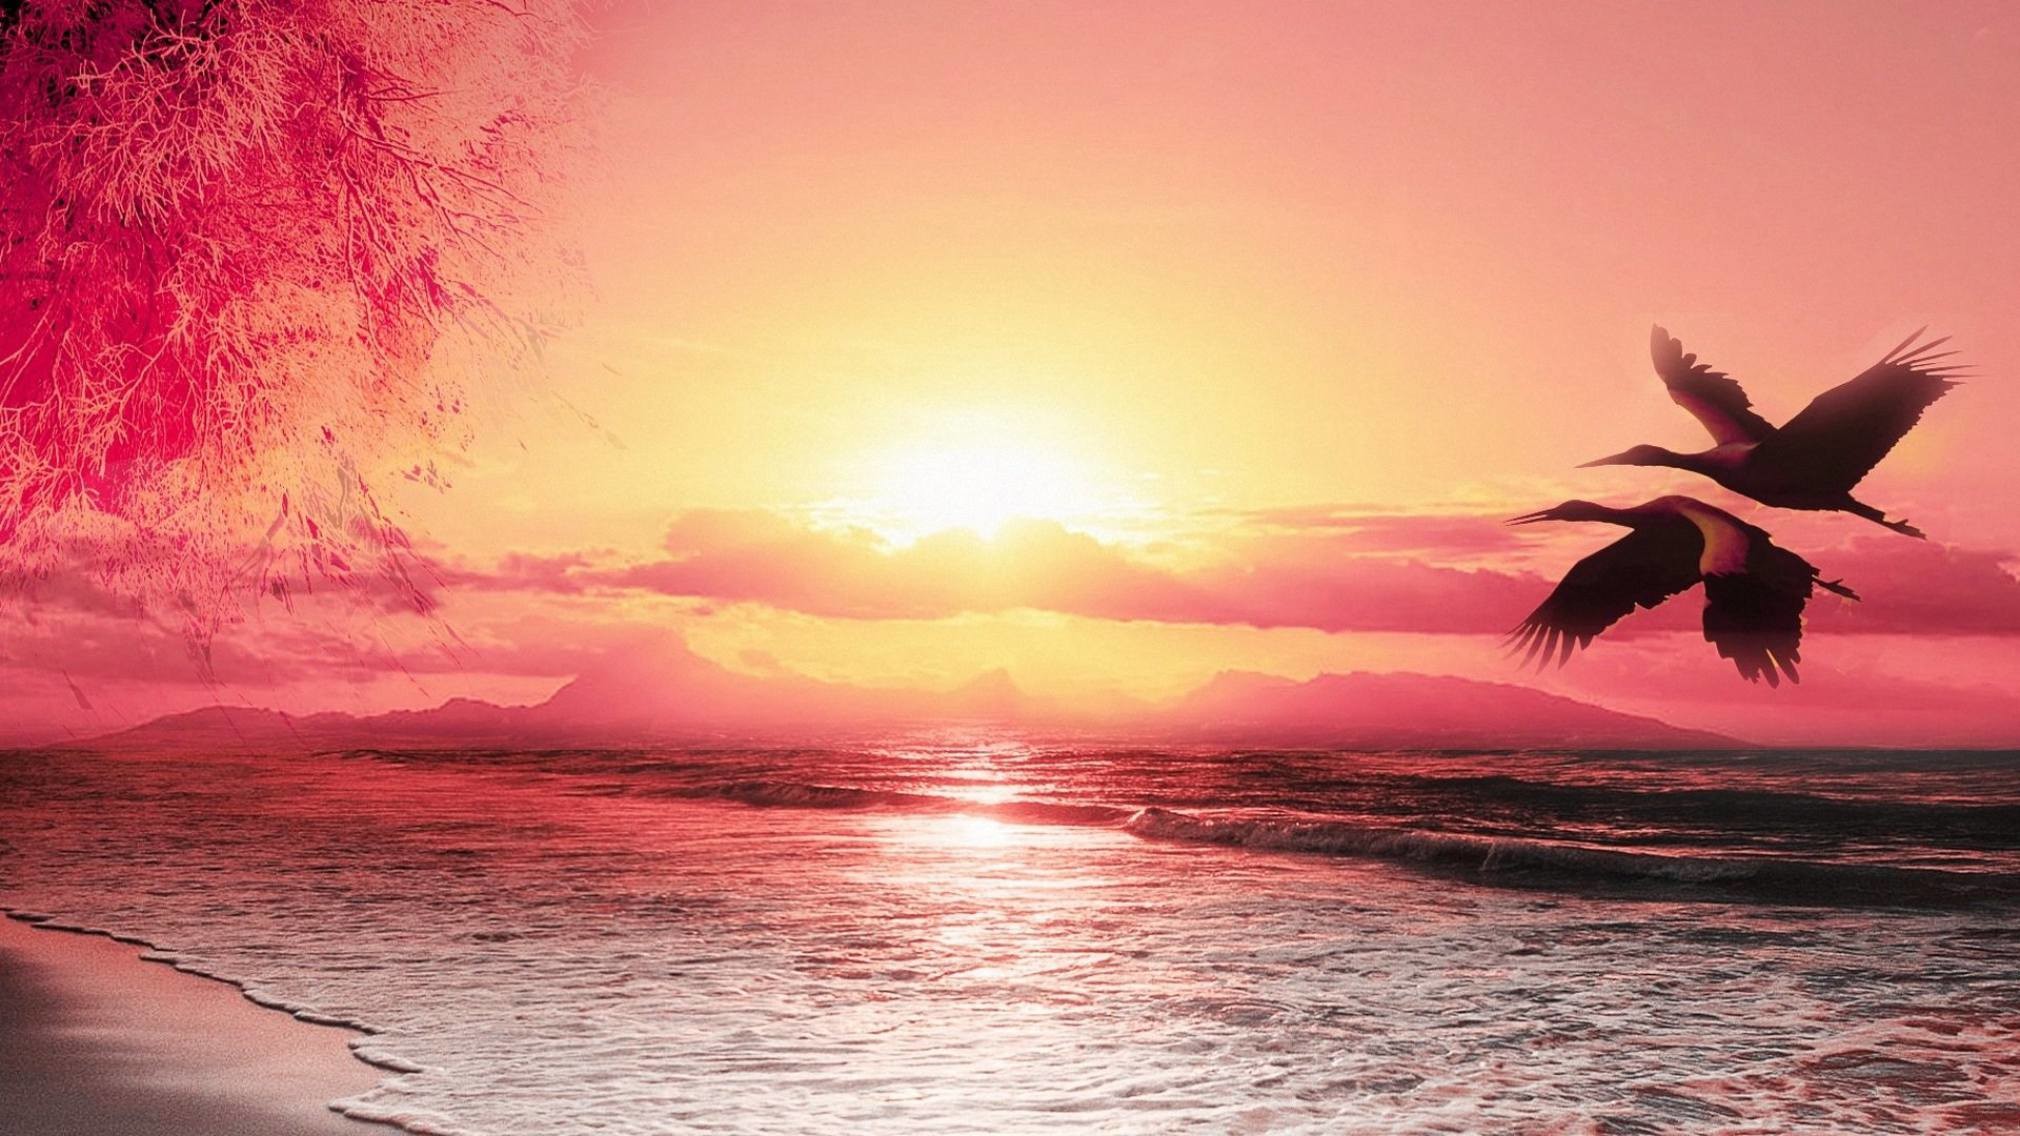 2020x1136 Beautiful seabirds beach sunset Scenery wallpaper material | Wallpaper .